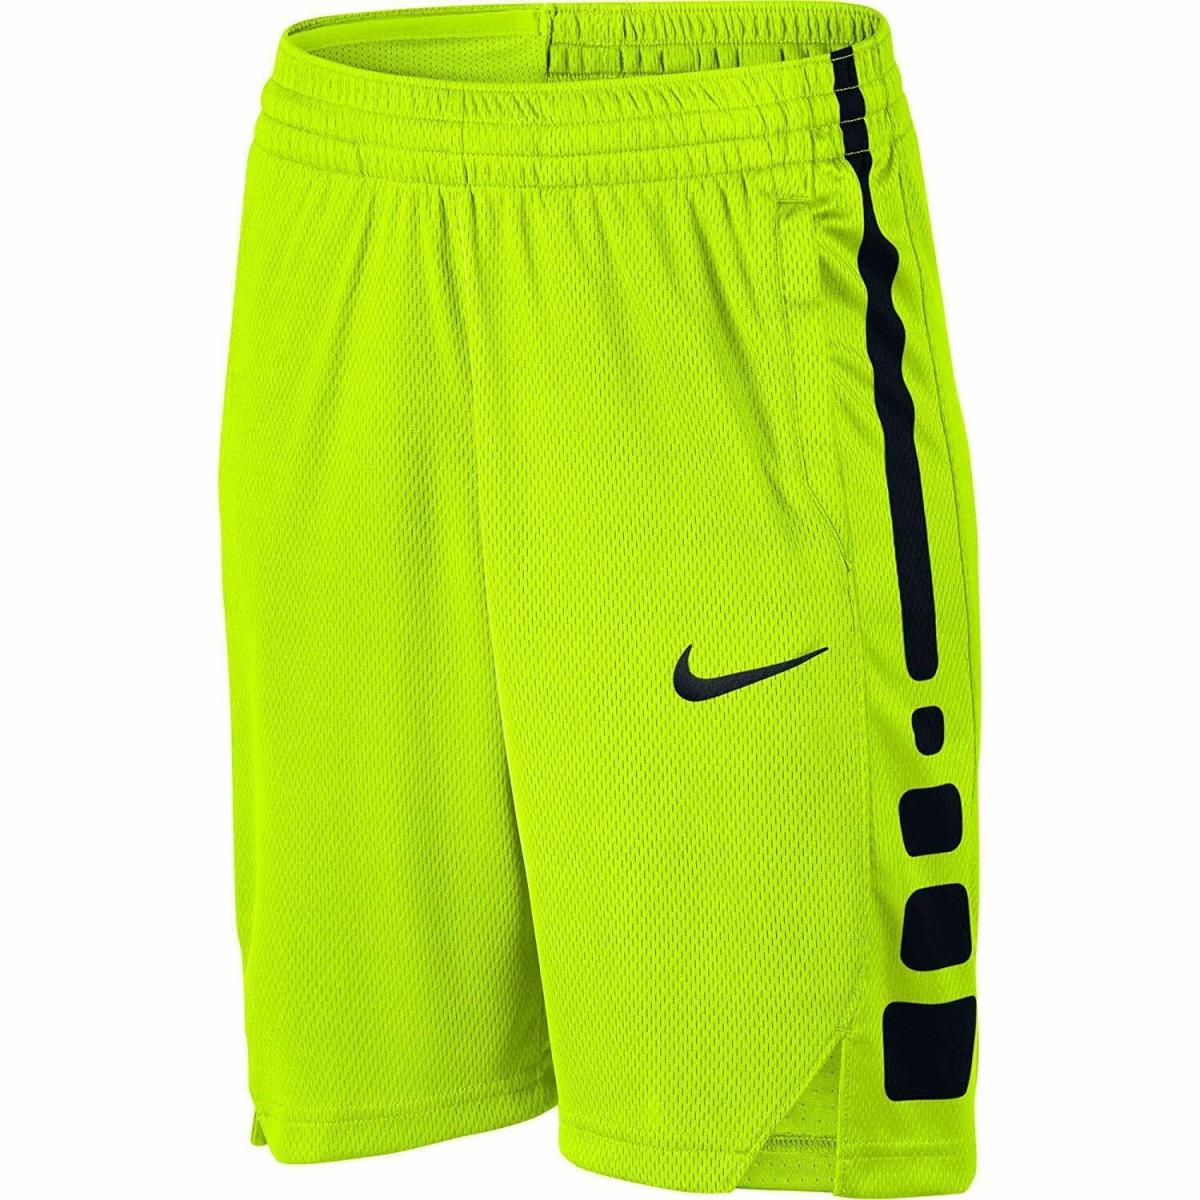 Nike Boys Basketball Shorts Dry Fit Mesh Neon Volt w Black Stripe Boys XS